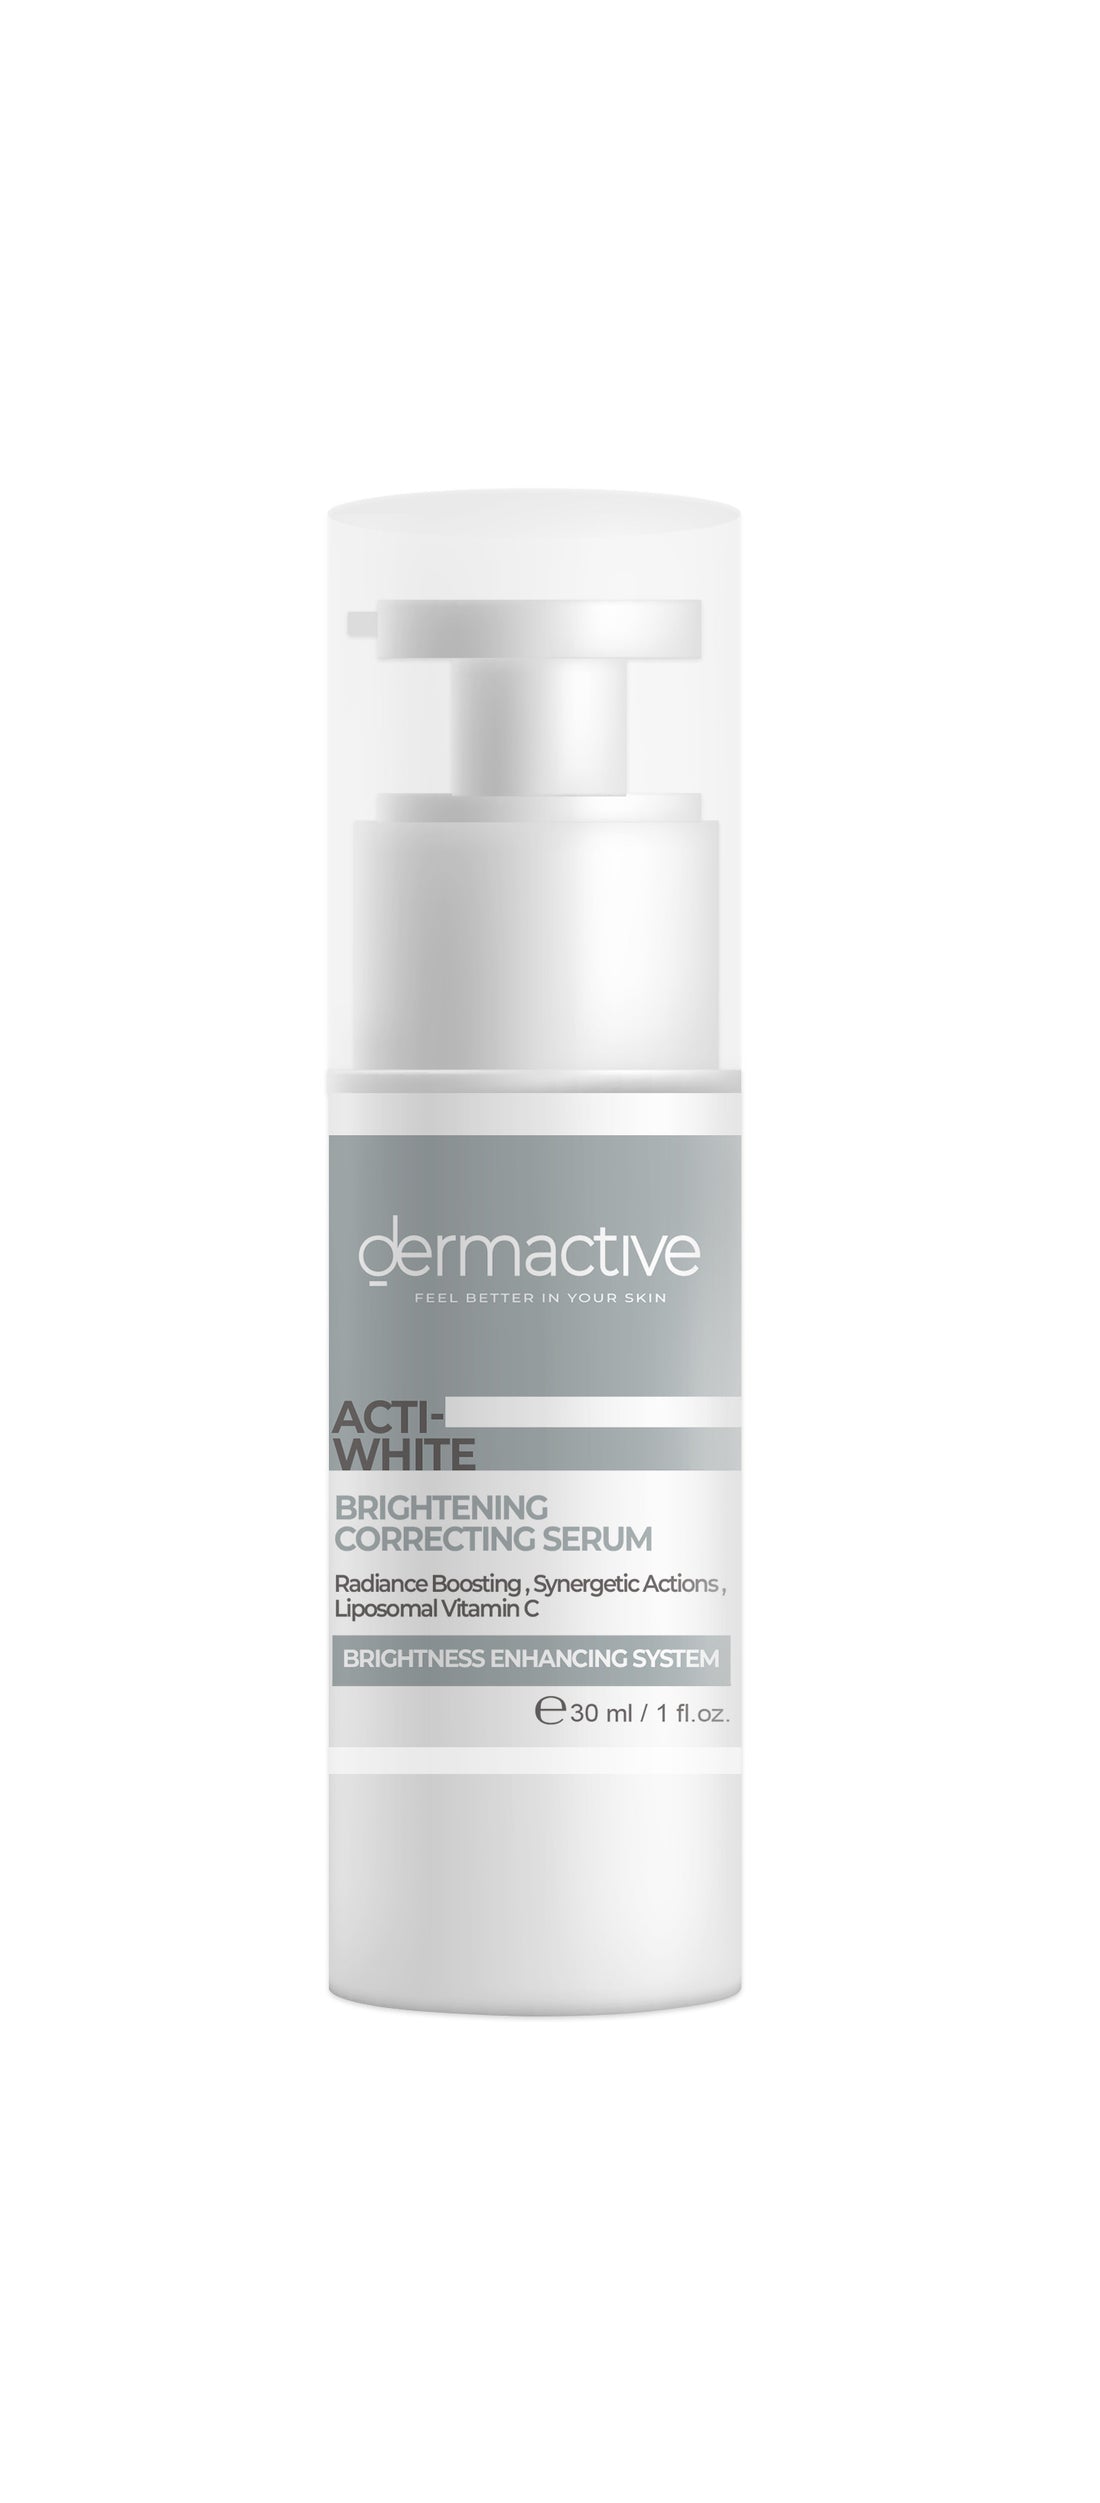 Dermactive ACTI-WHITE Correcting Seum 30ml